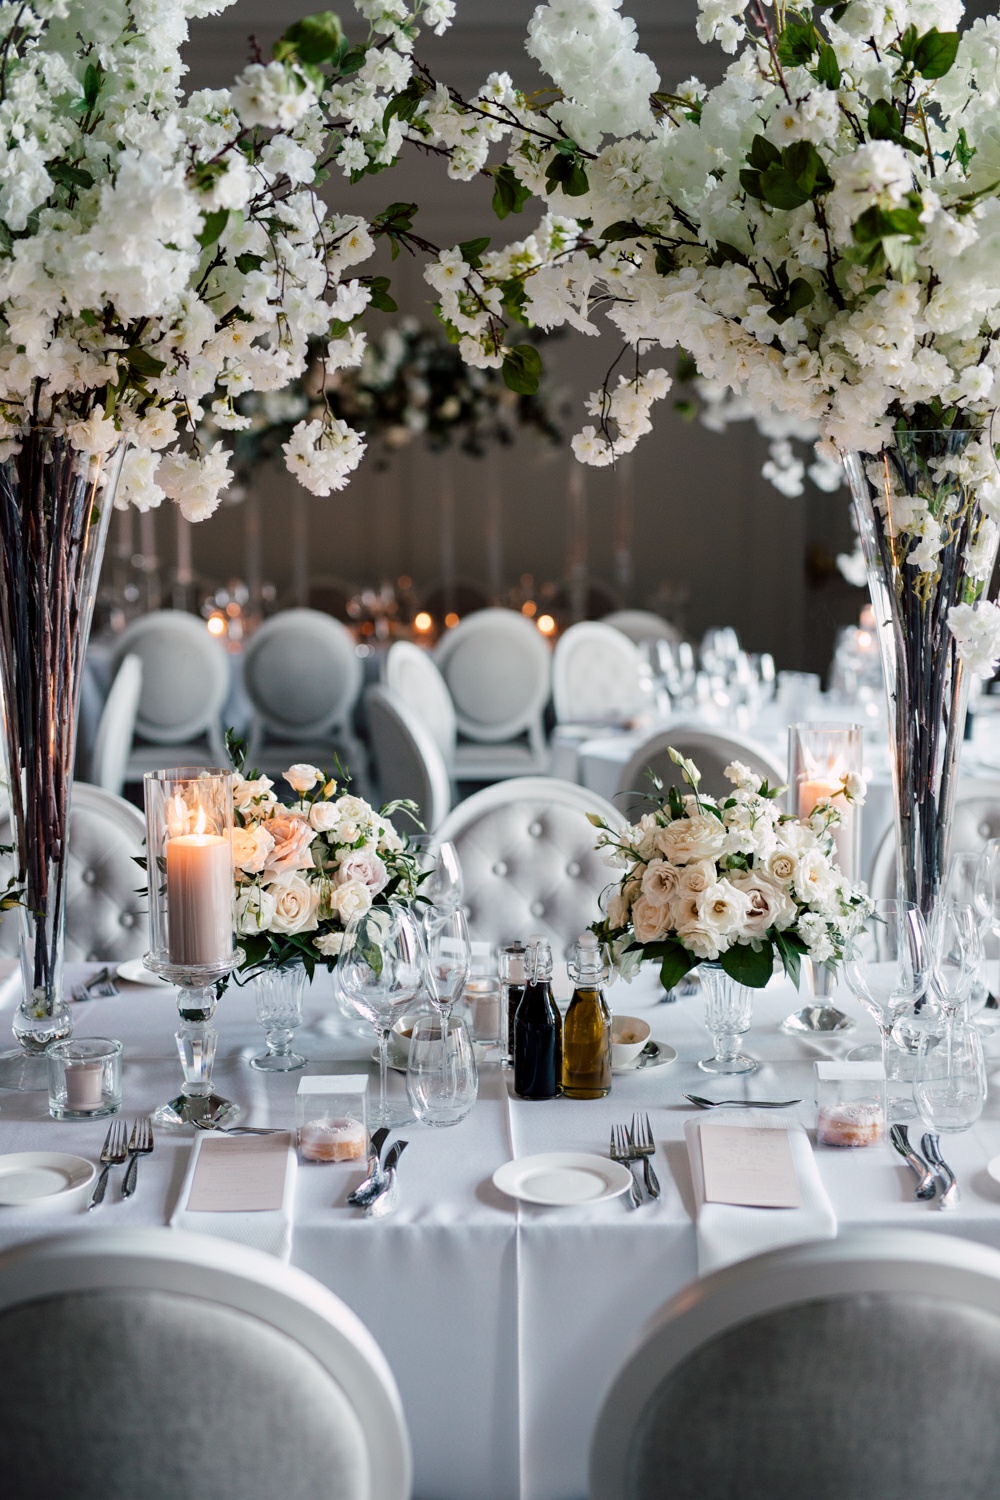 Elegant white and grey wedding venue decor